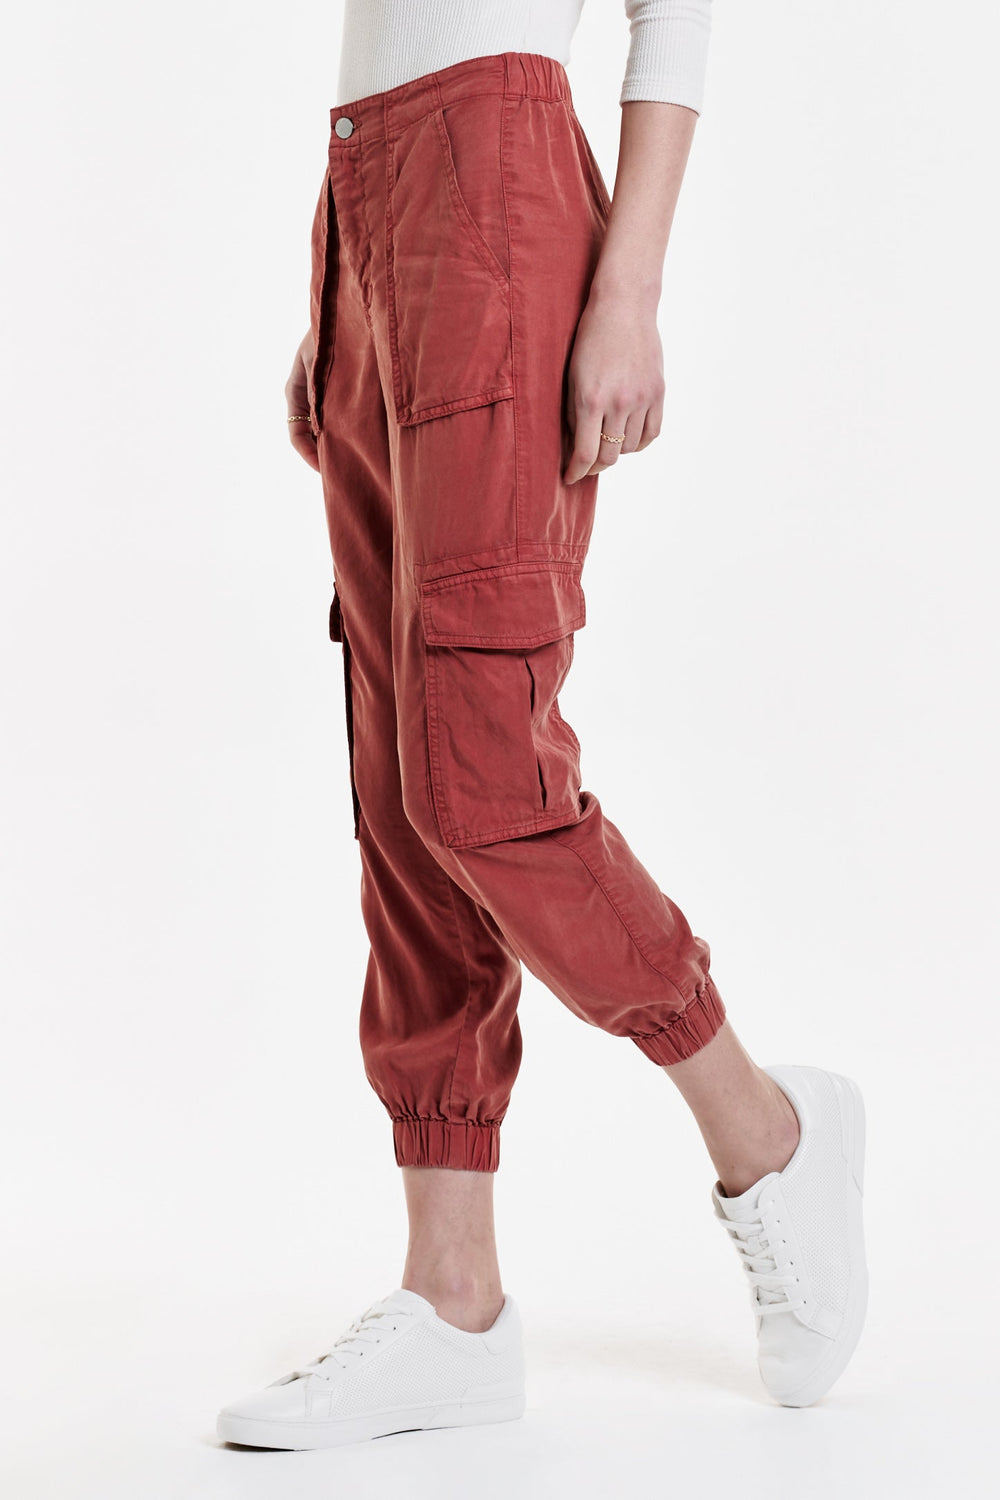 image of a female model wearing a SANDY SUPER HIGH RISE ANKLE TROUSER PANTS POTTERS CLAY DEAR JOHN DENIM 